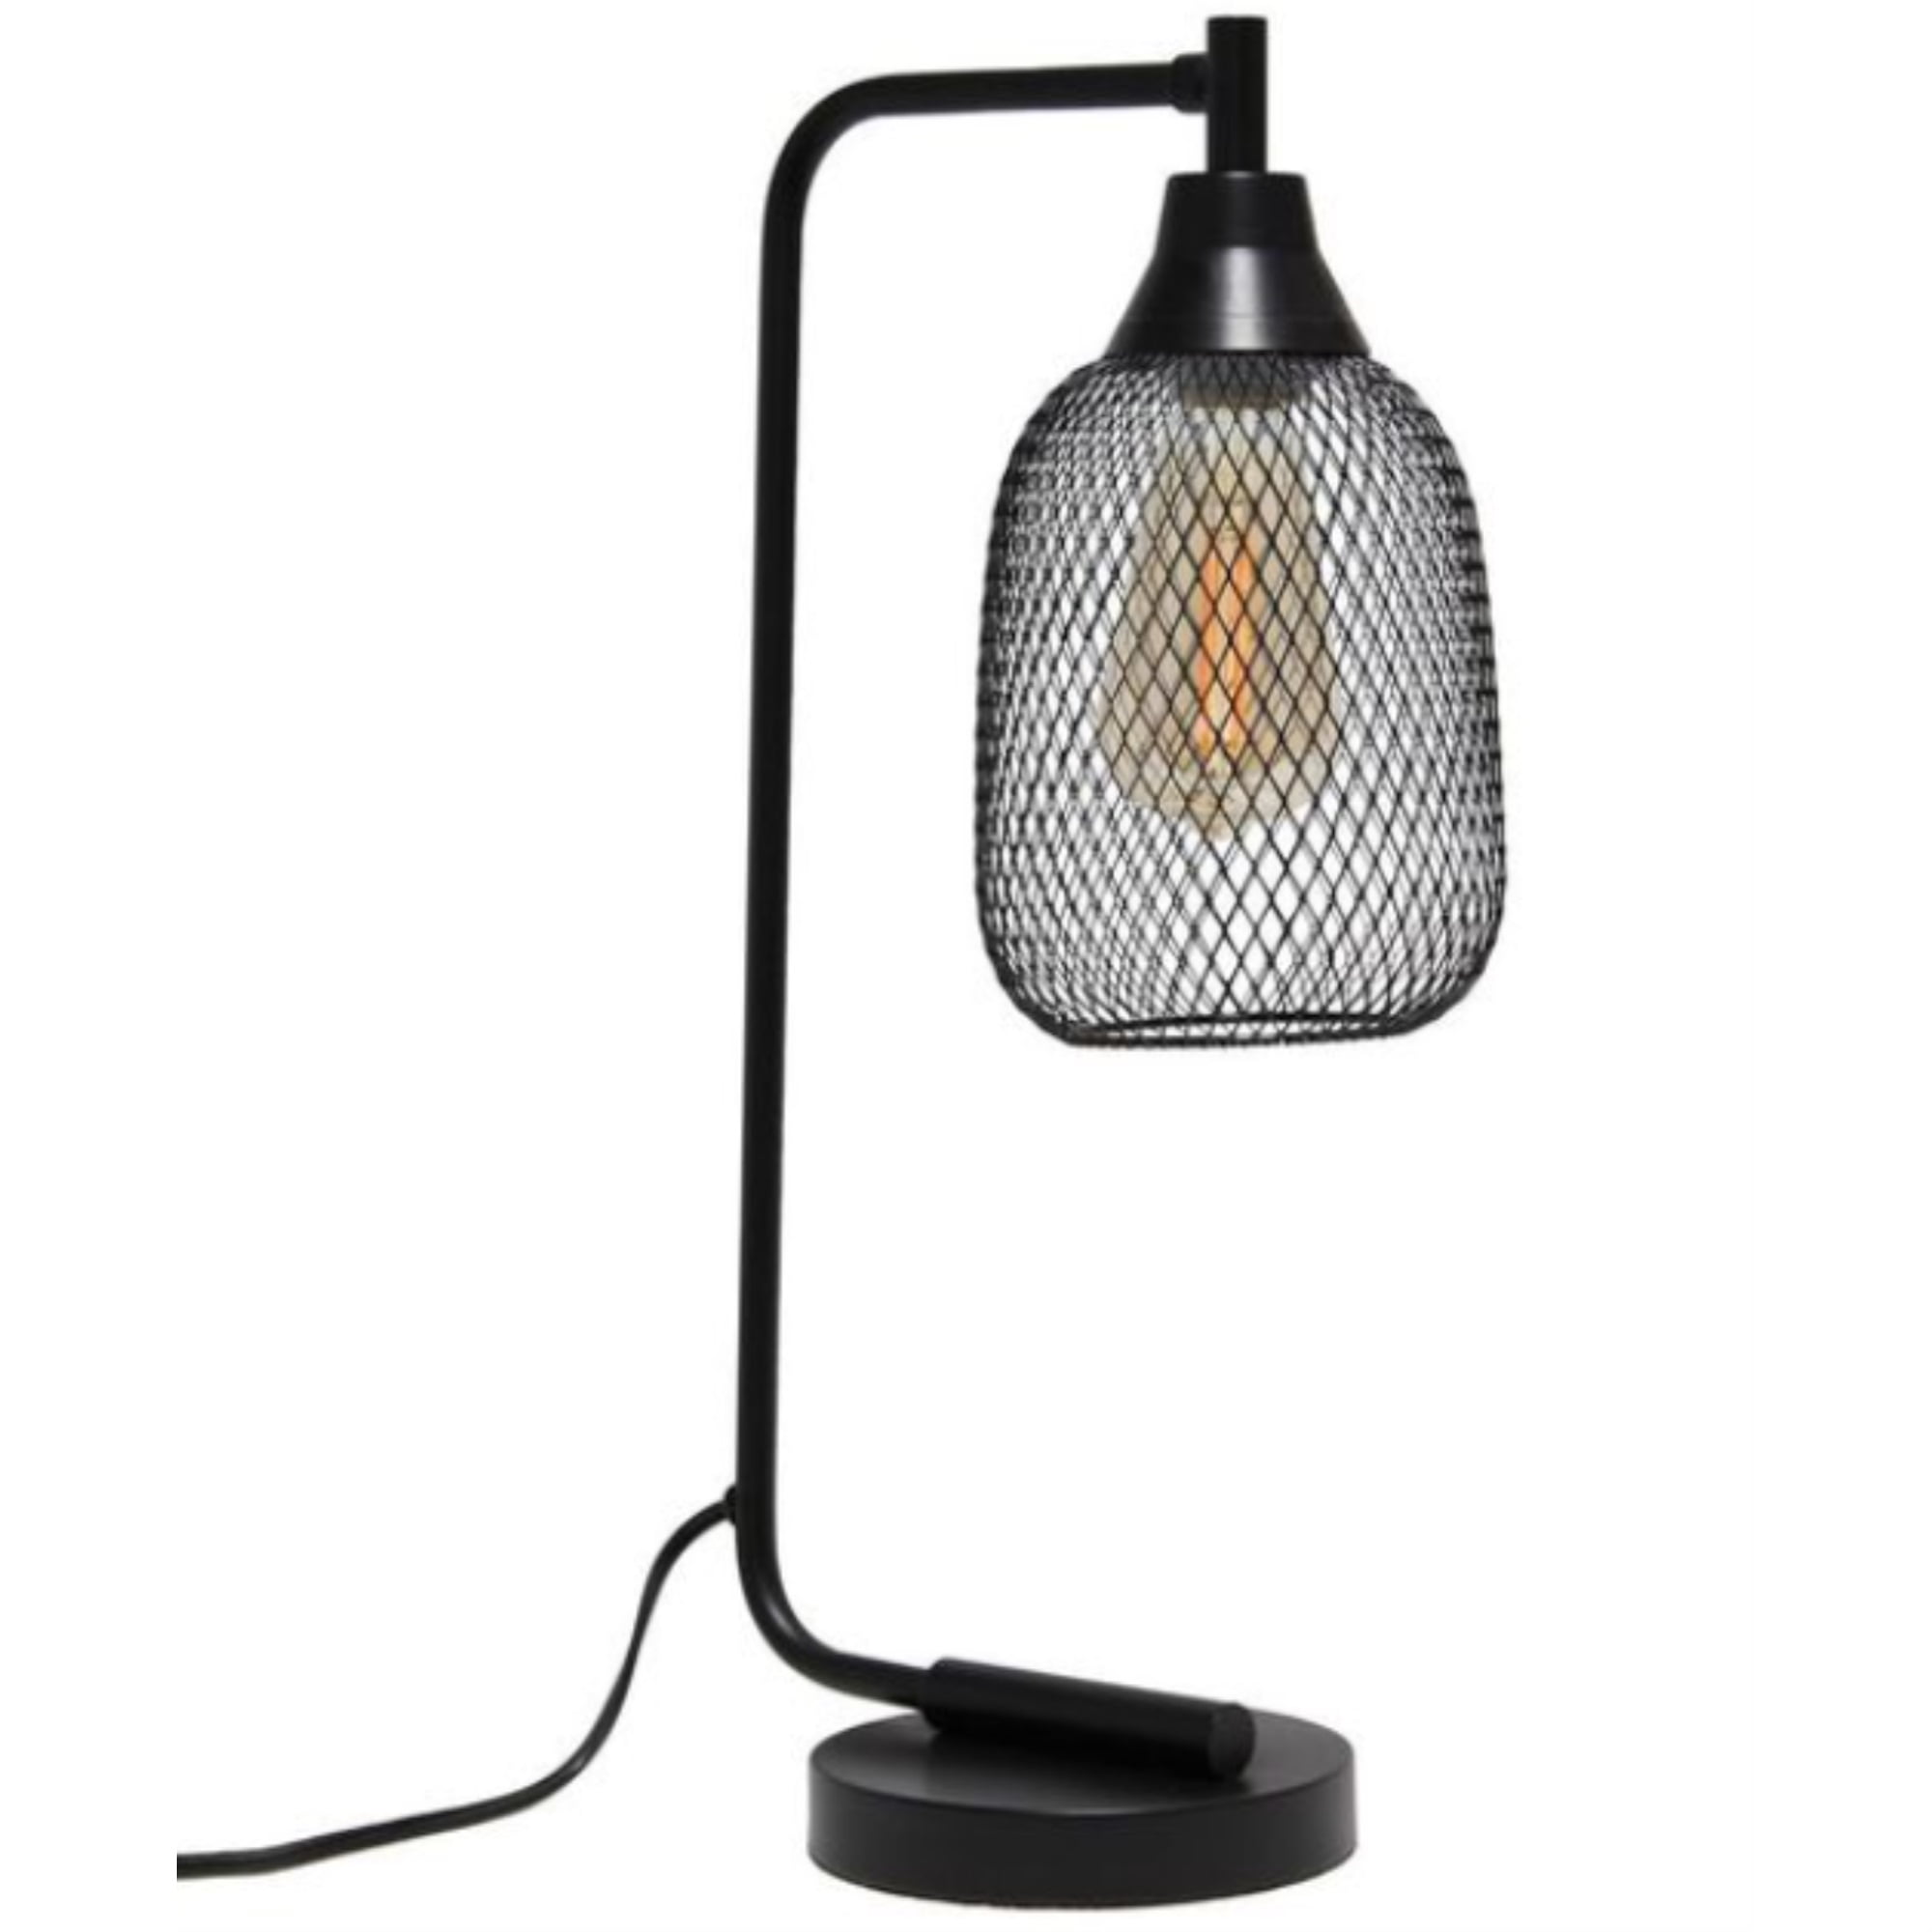 Lalia Home Industrial Mesh Desk Lamp, Matte Black